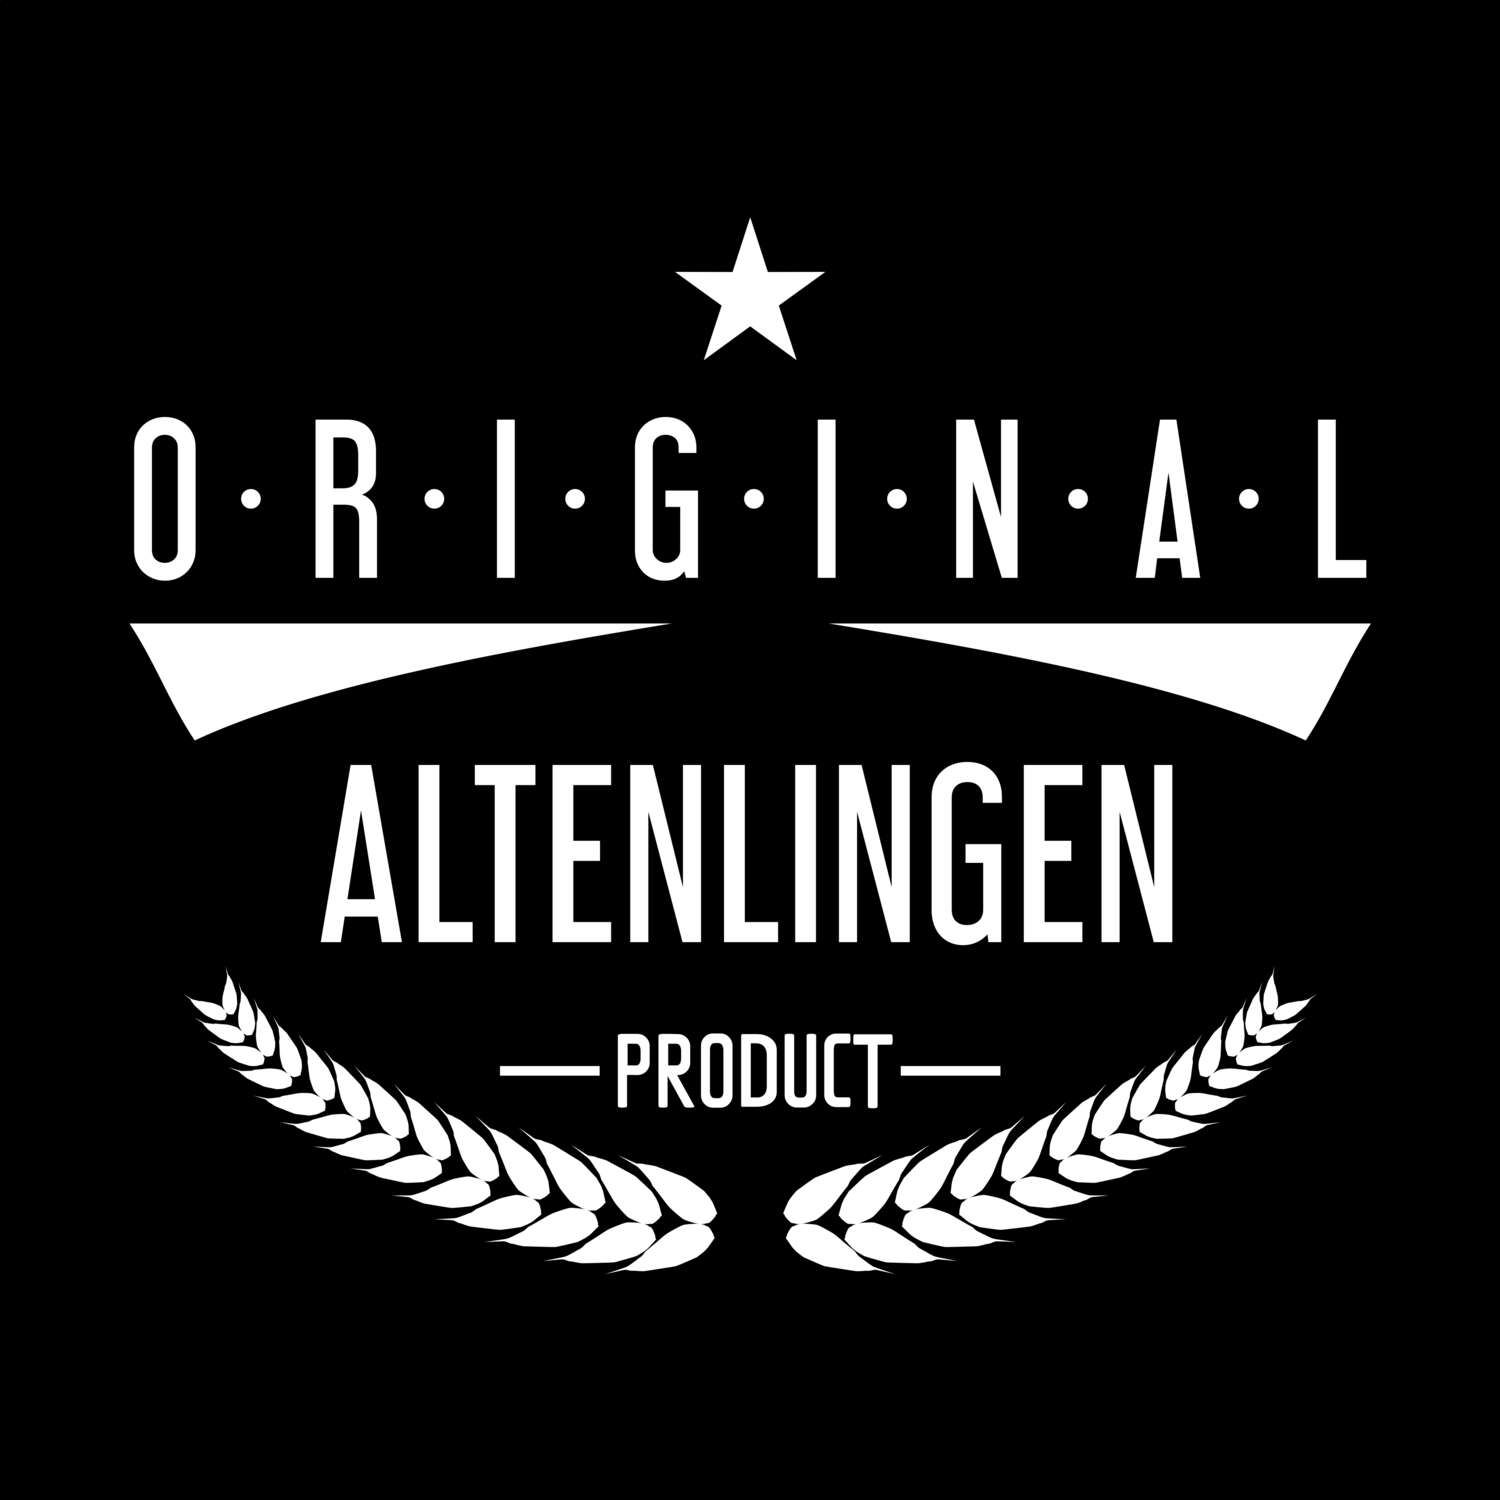 Altenlingen T-Shirt »Original Product«